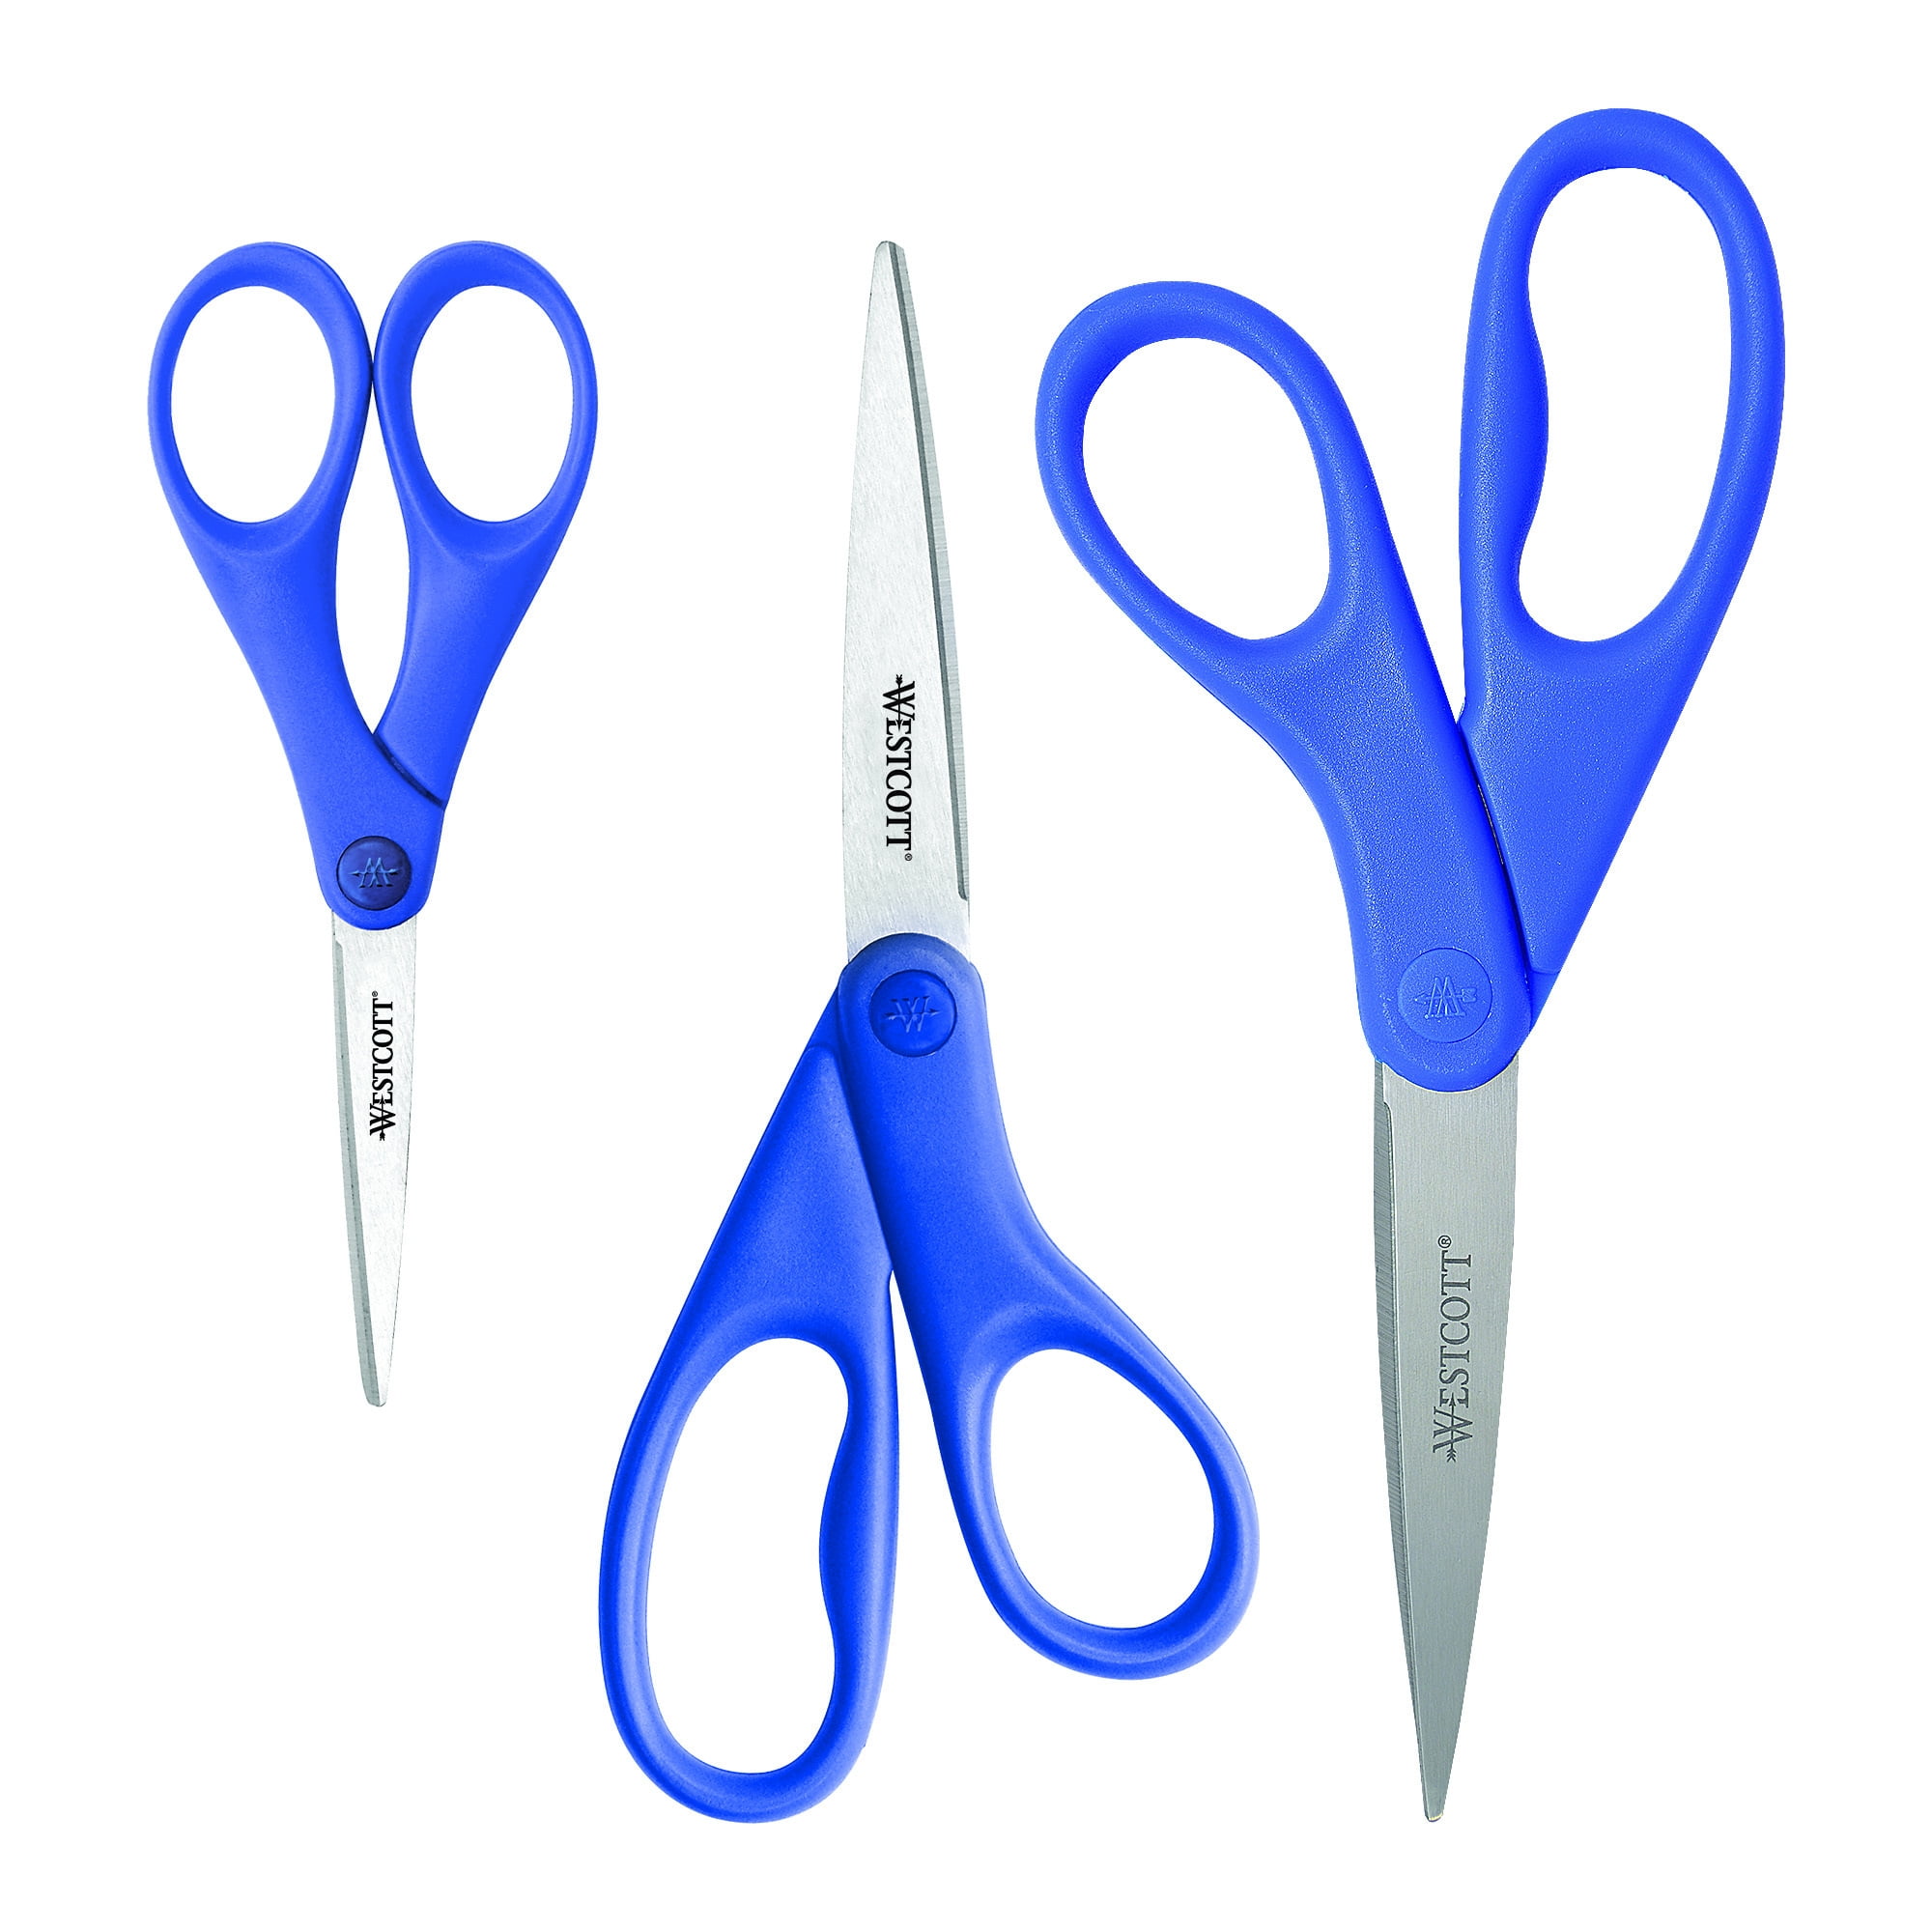 Westcott All Purpose Scissors, 5, 7, 8, for Craft, Blue, 3-Pack